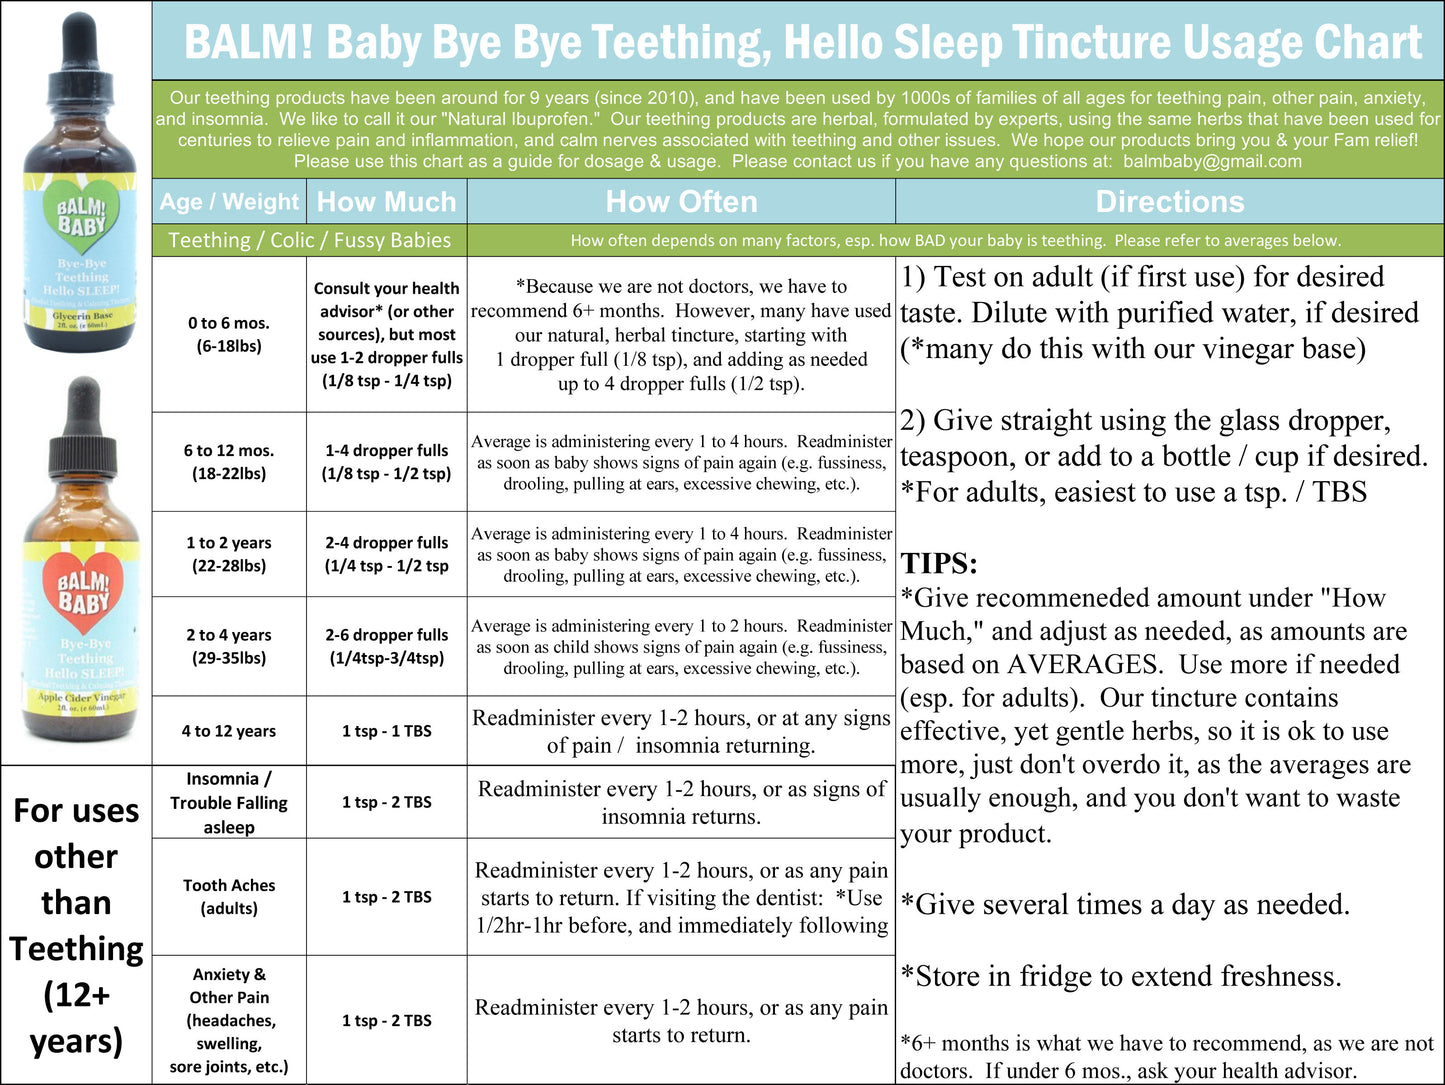 BALM! Baby - Bye Bye Teething Hello SLEEP! Natural & Organic Teething & Calming Tincture